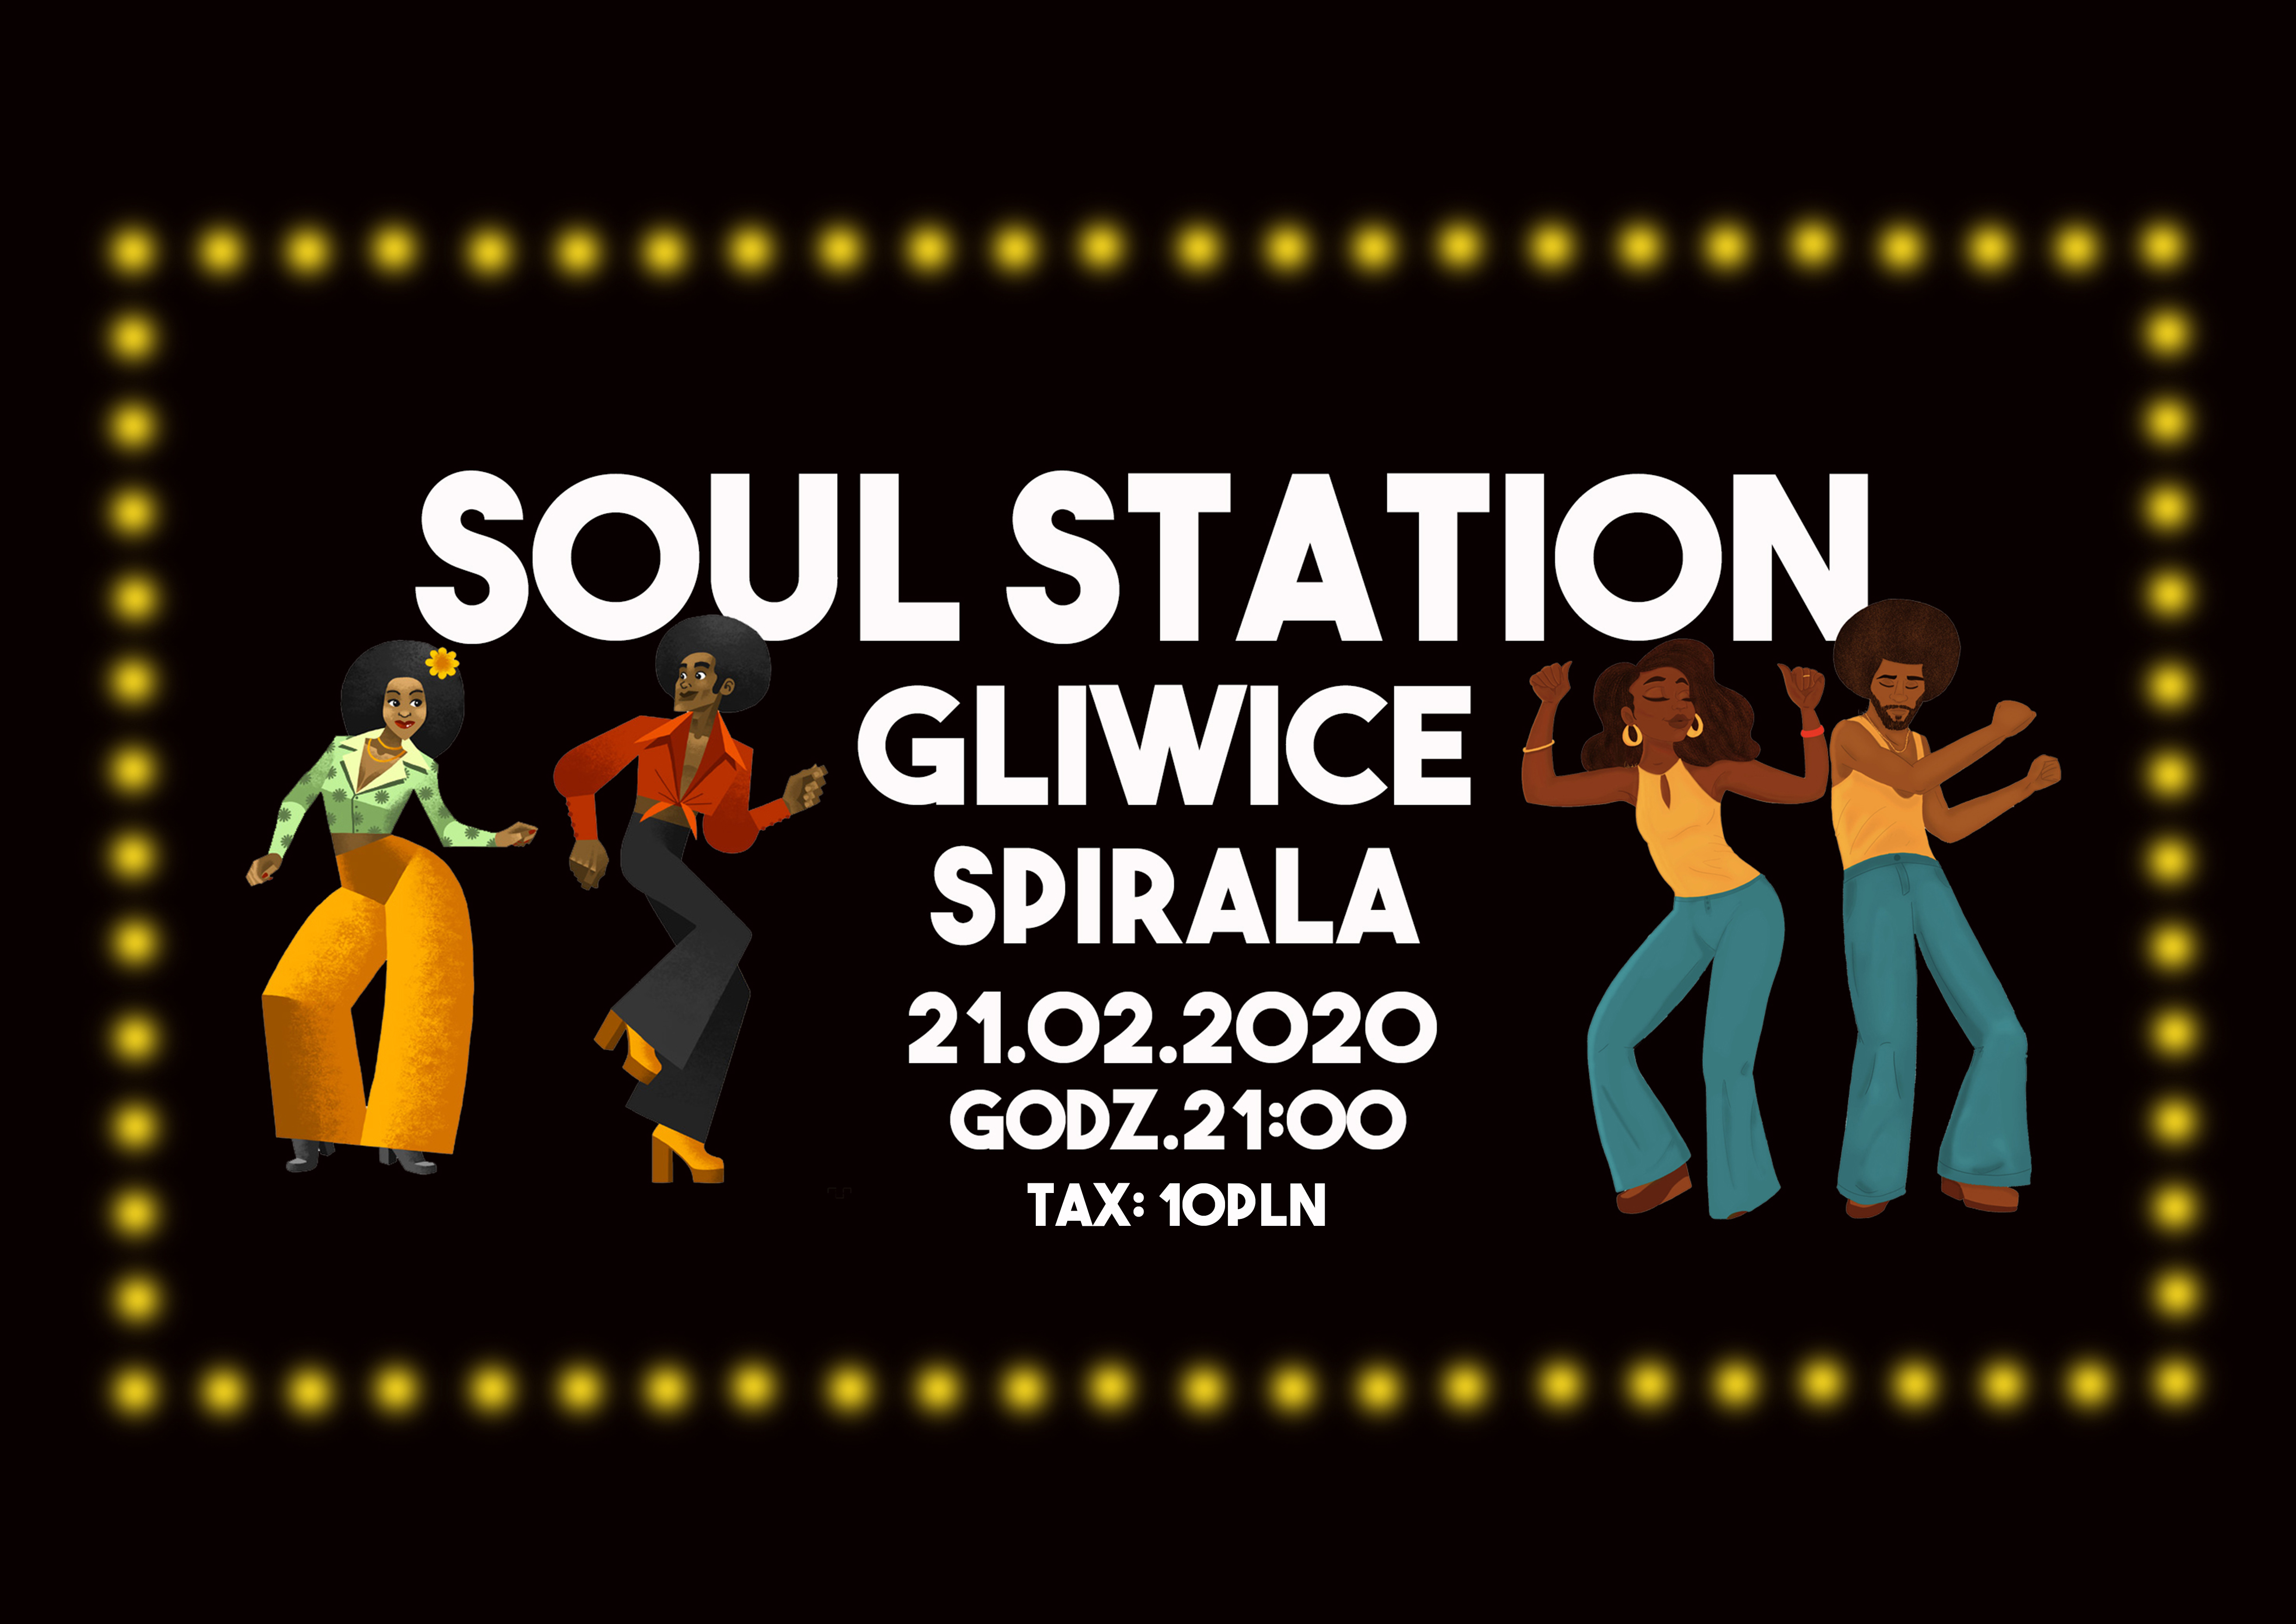 Soul Station Gliwice iLOVE’70